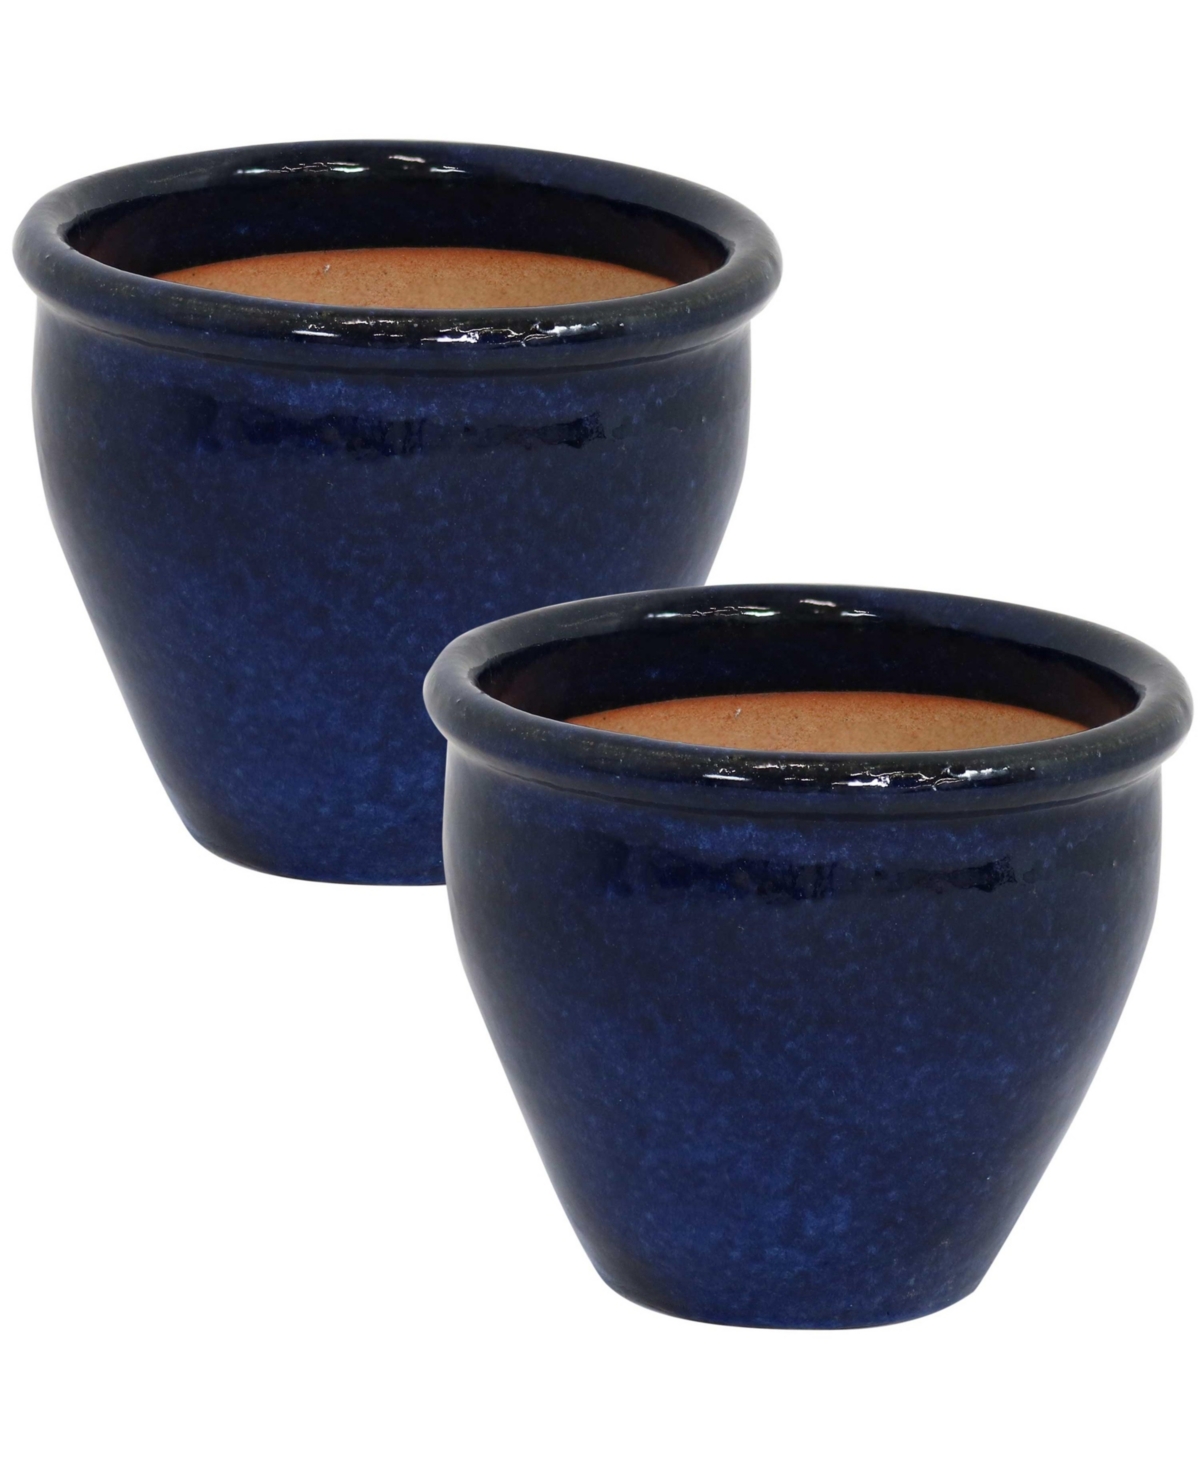 9 in Chalet Glazed Ceramic Planter - Imperial Blue - Set of 2 - Dark blue